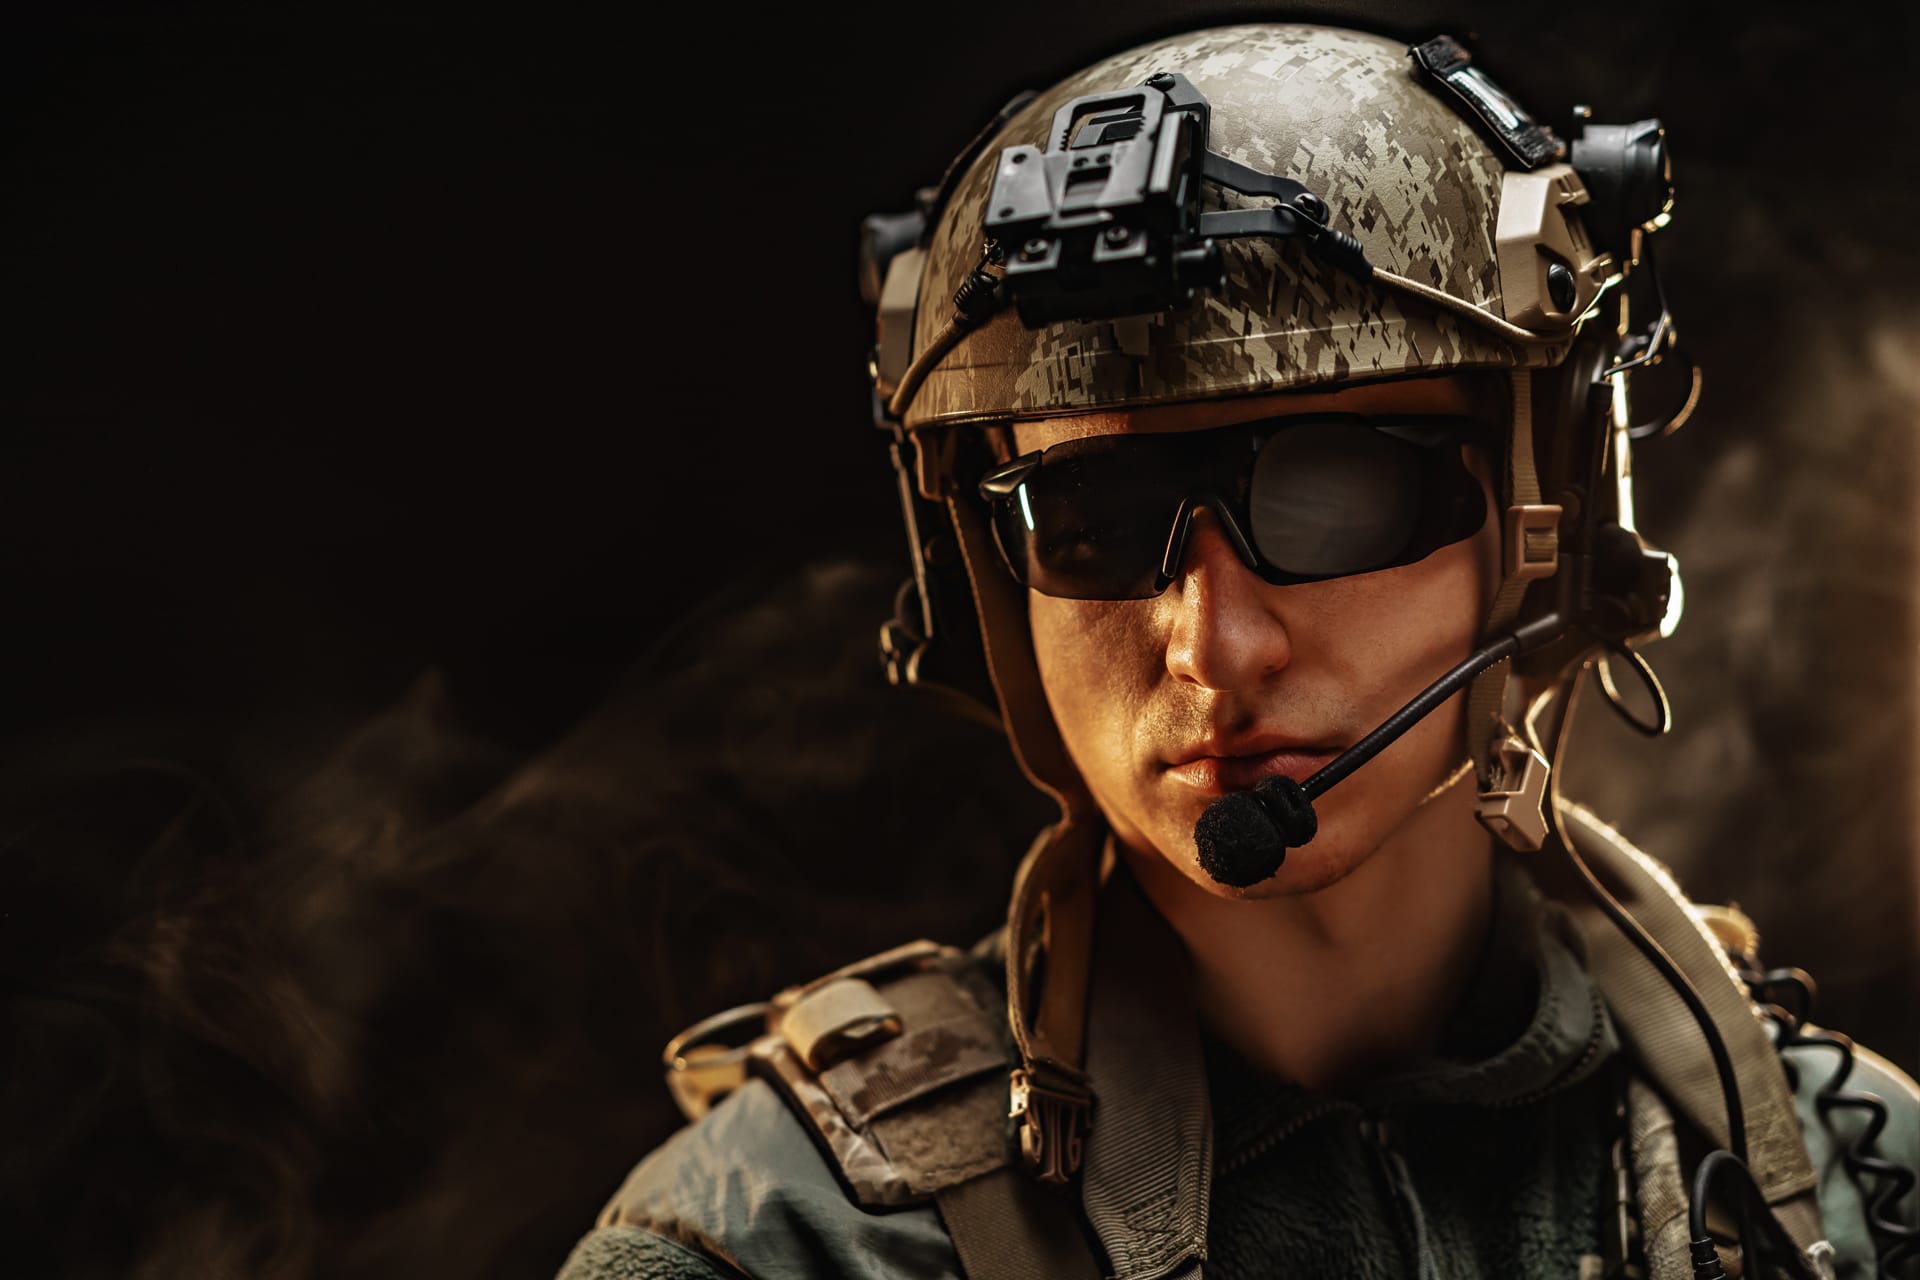 Portrait special forces soldier helmet glasses dark